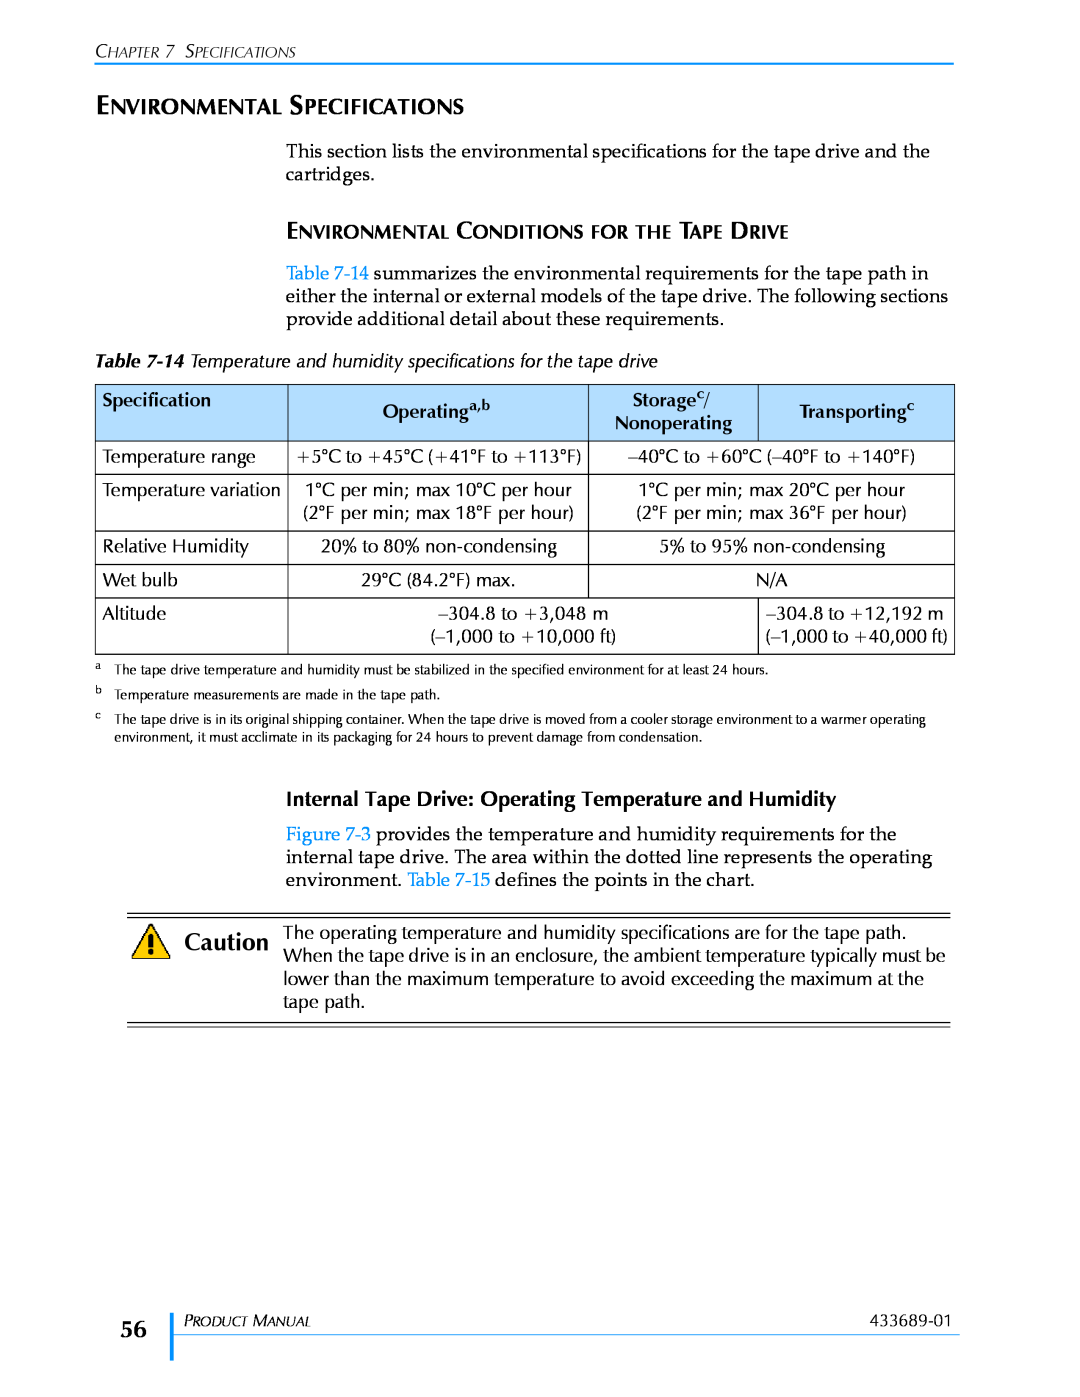 Tandberg Data VXA-320 (VXA-3) manual Environmental Specifications, Environmental Conditions For The Tape Drive 